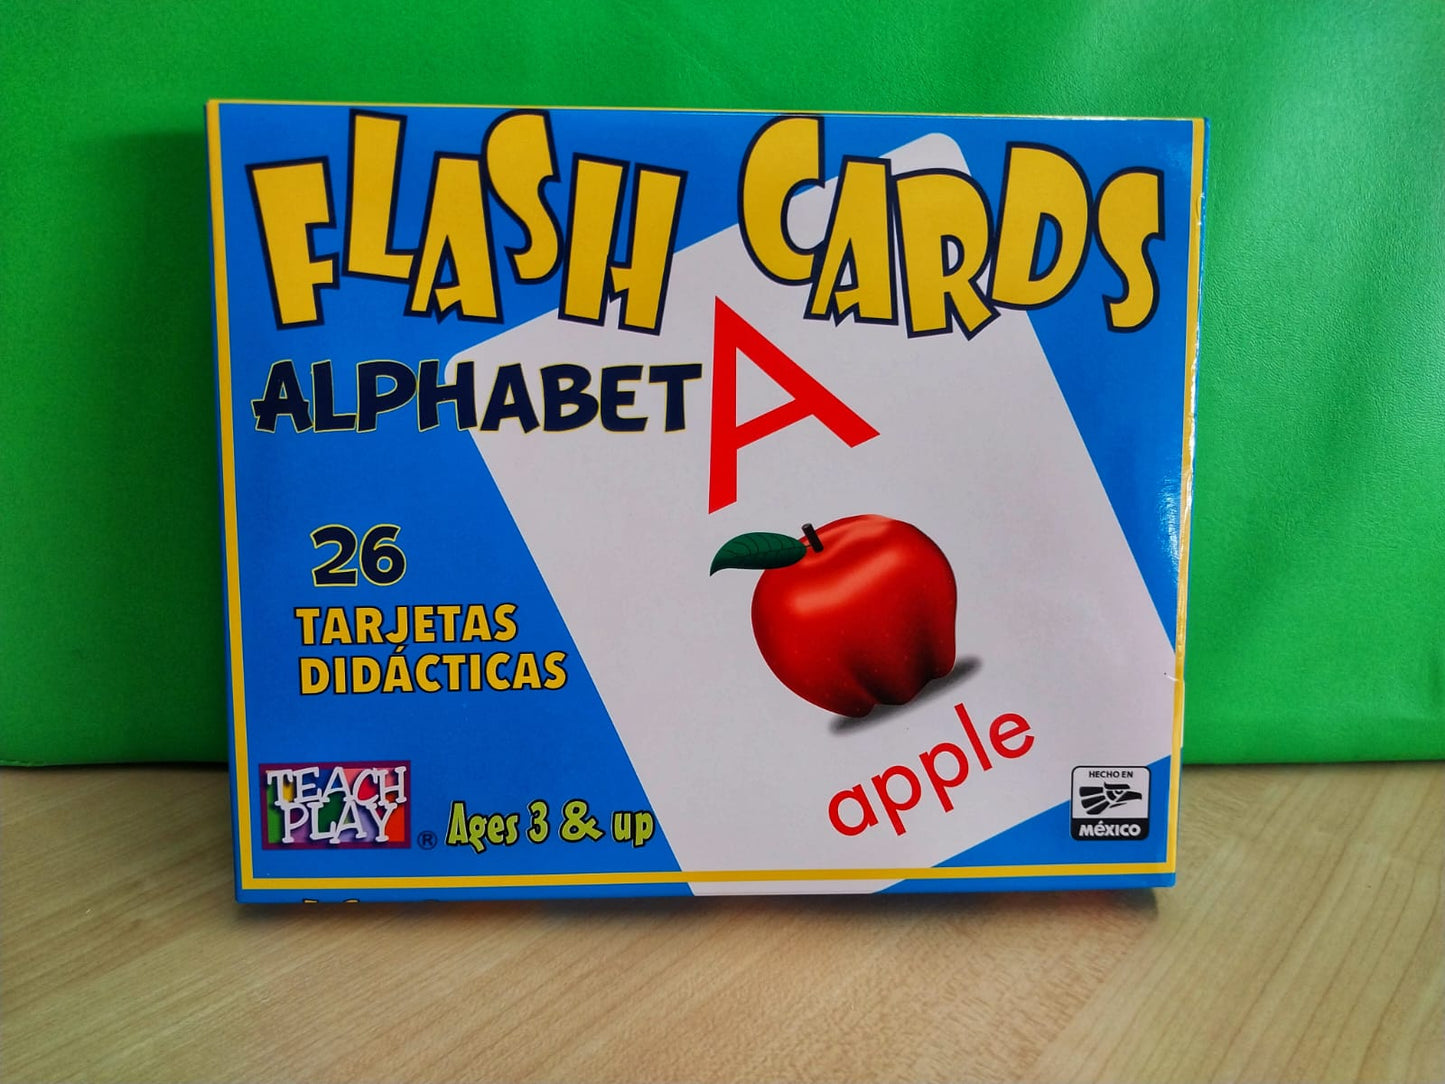 FLASH CARDS ALPHABET